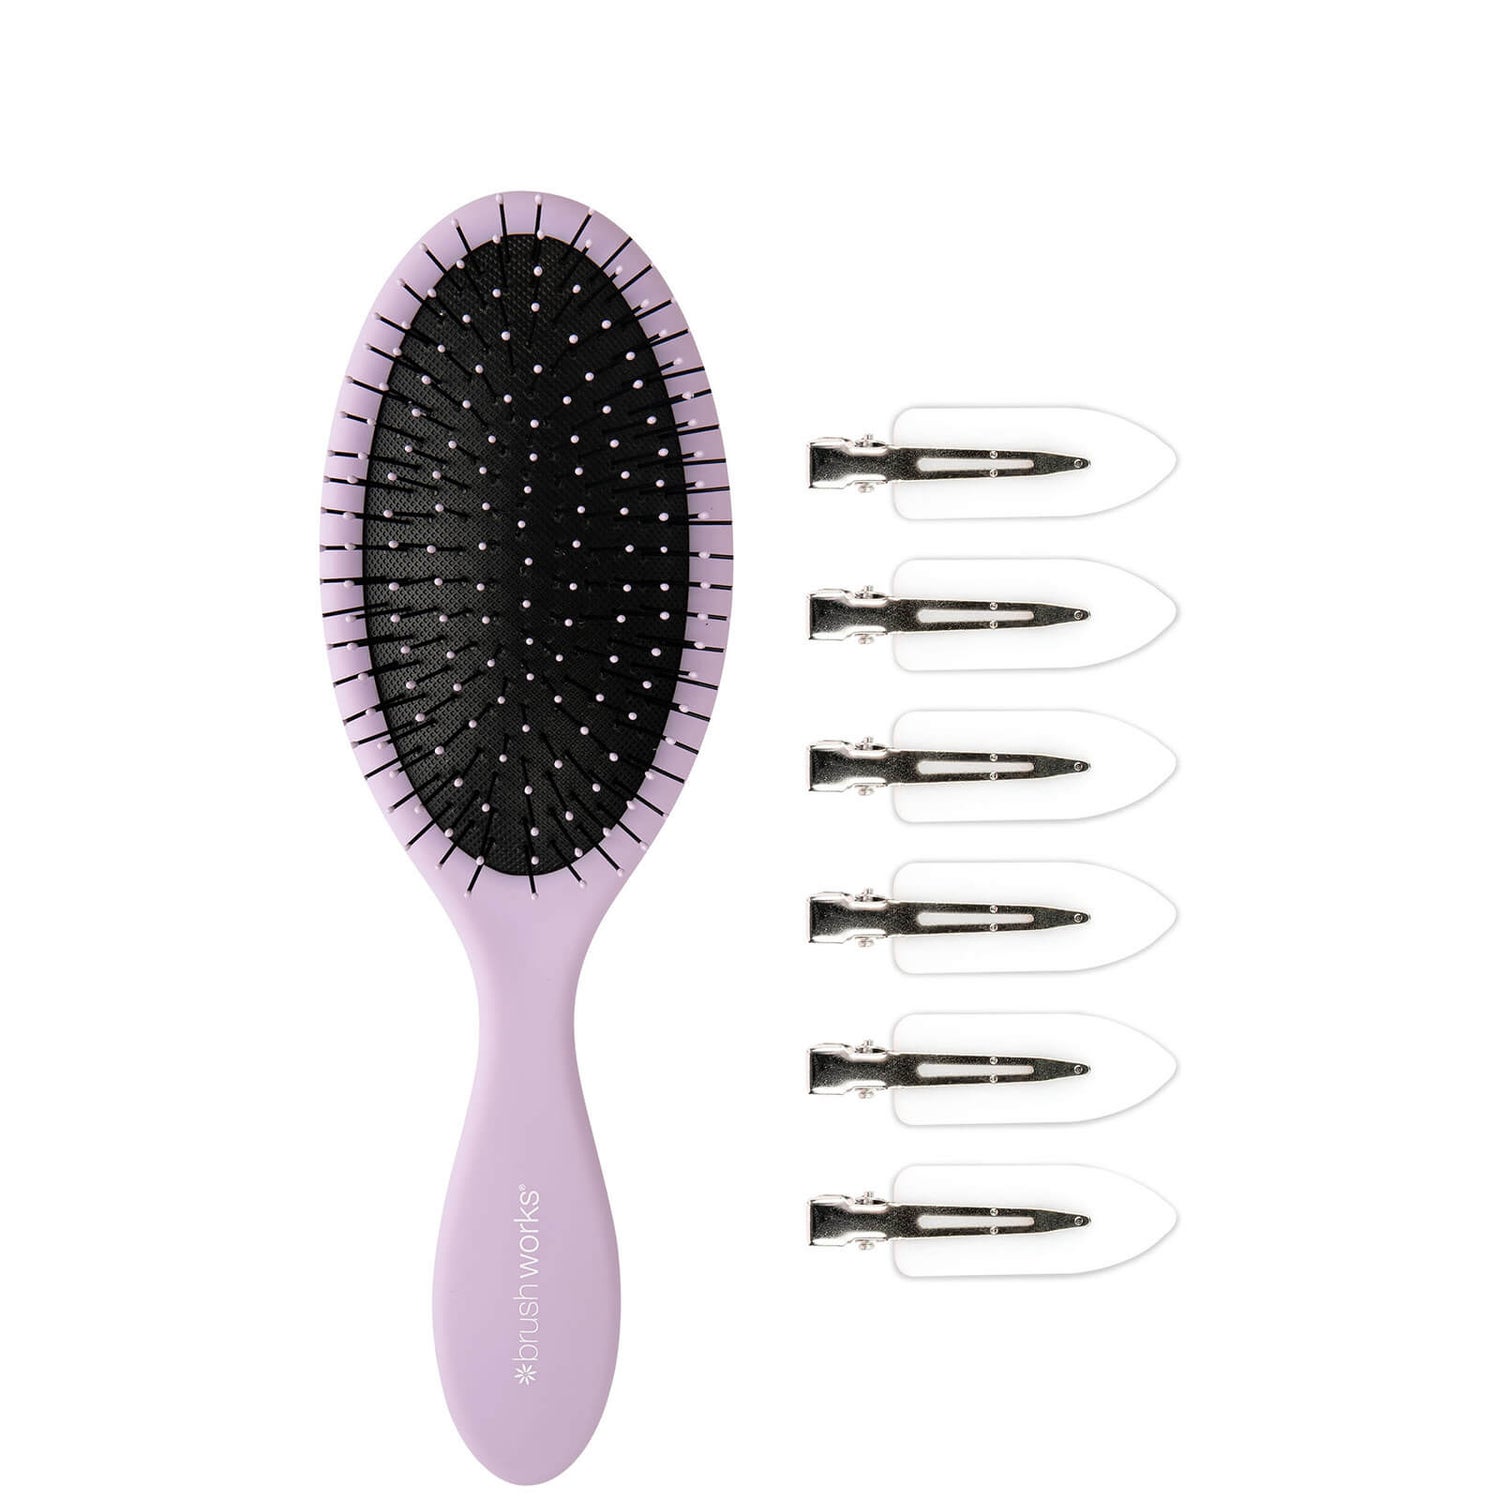 brushworks Luxury Purple Hair Styling Set (Worth £11.99)